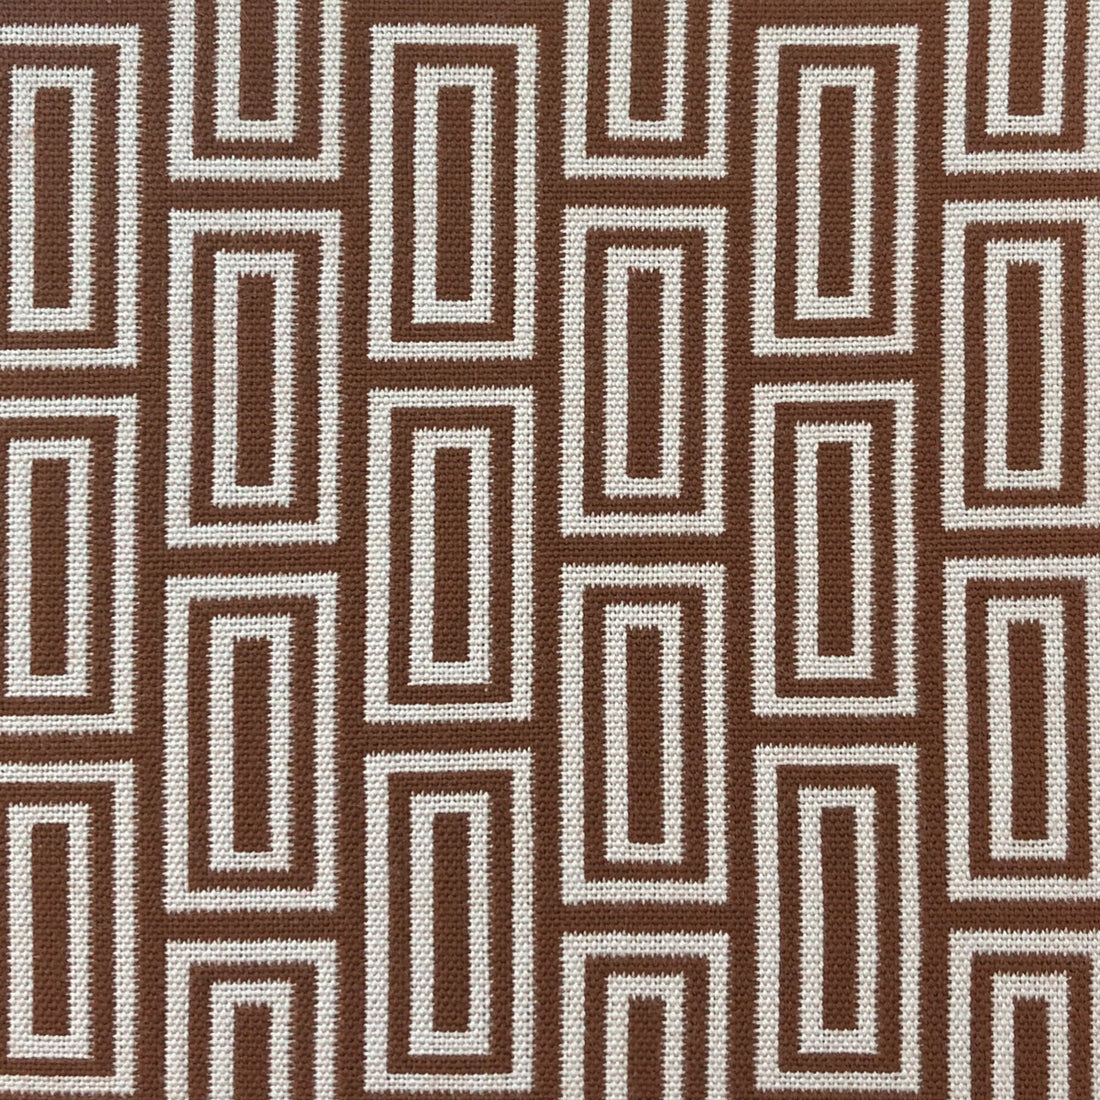 Caleb fabric in tabaco color - pattern LCT1056.001.0 - by Gaston y Daniela in the Lorenzo Castillo VI collection